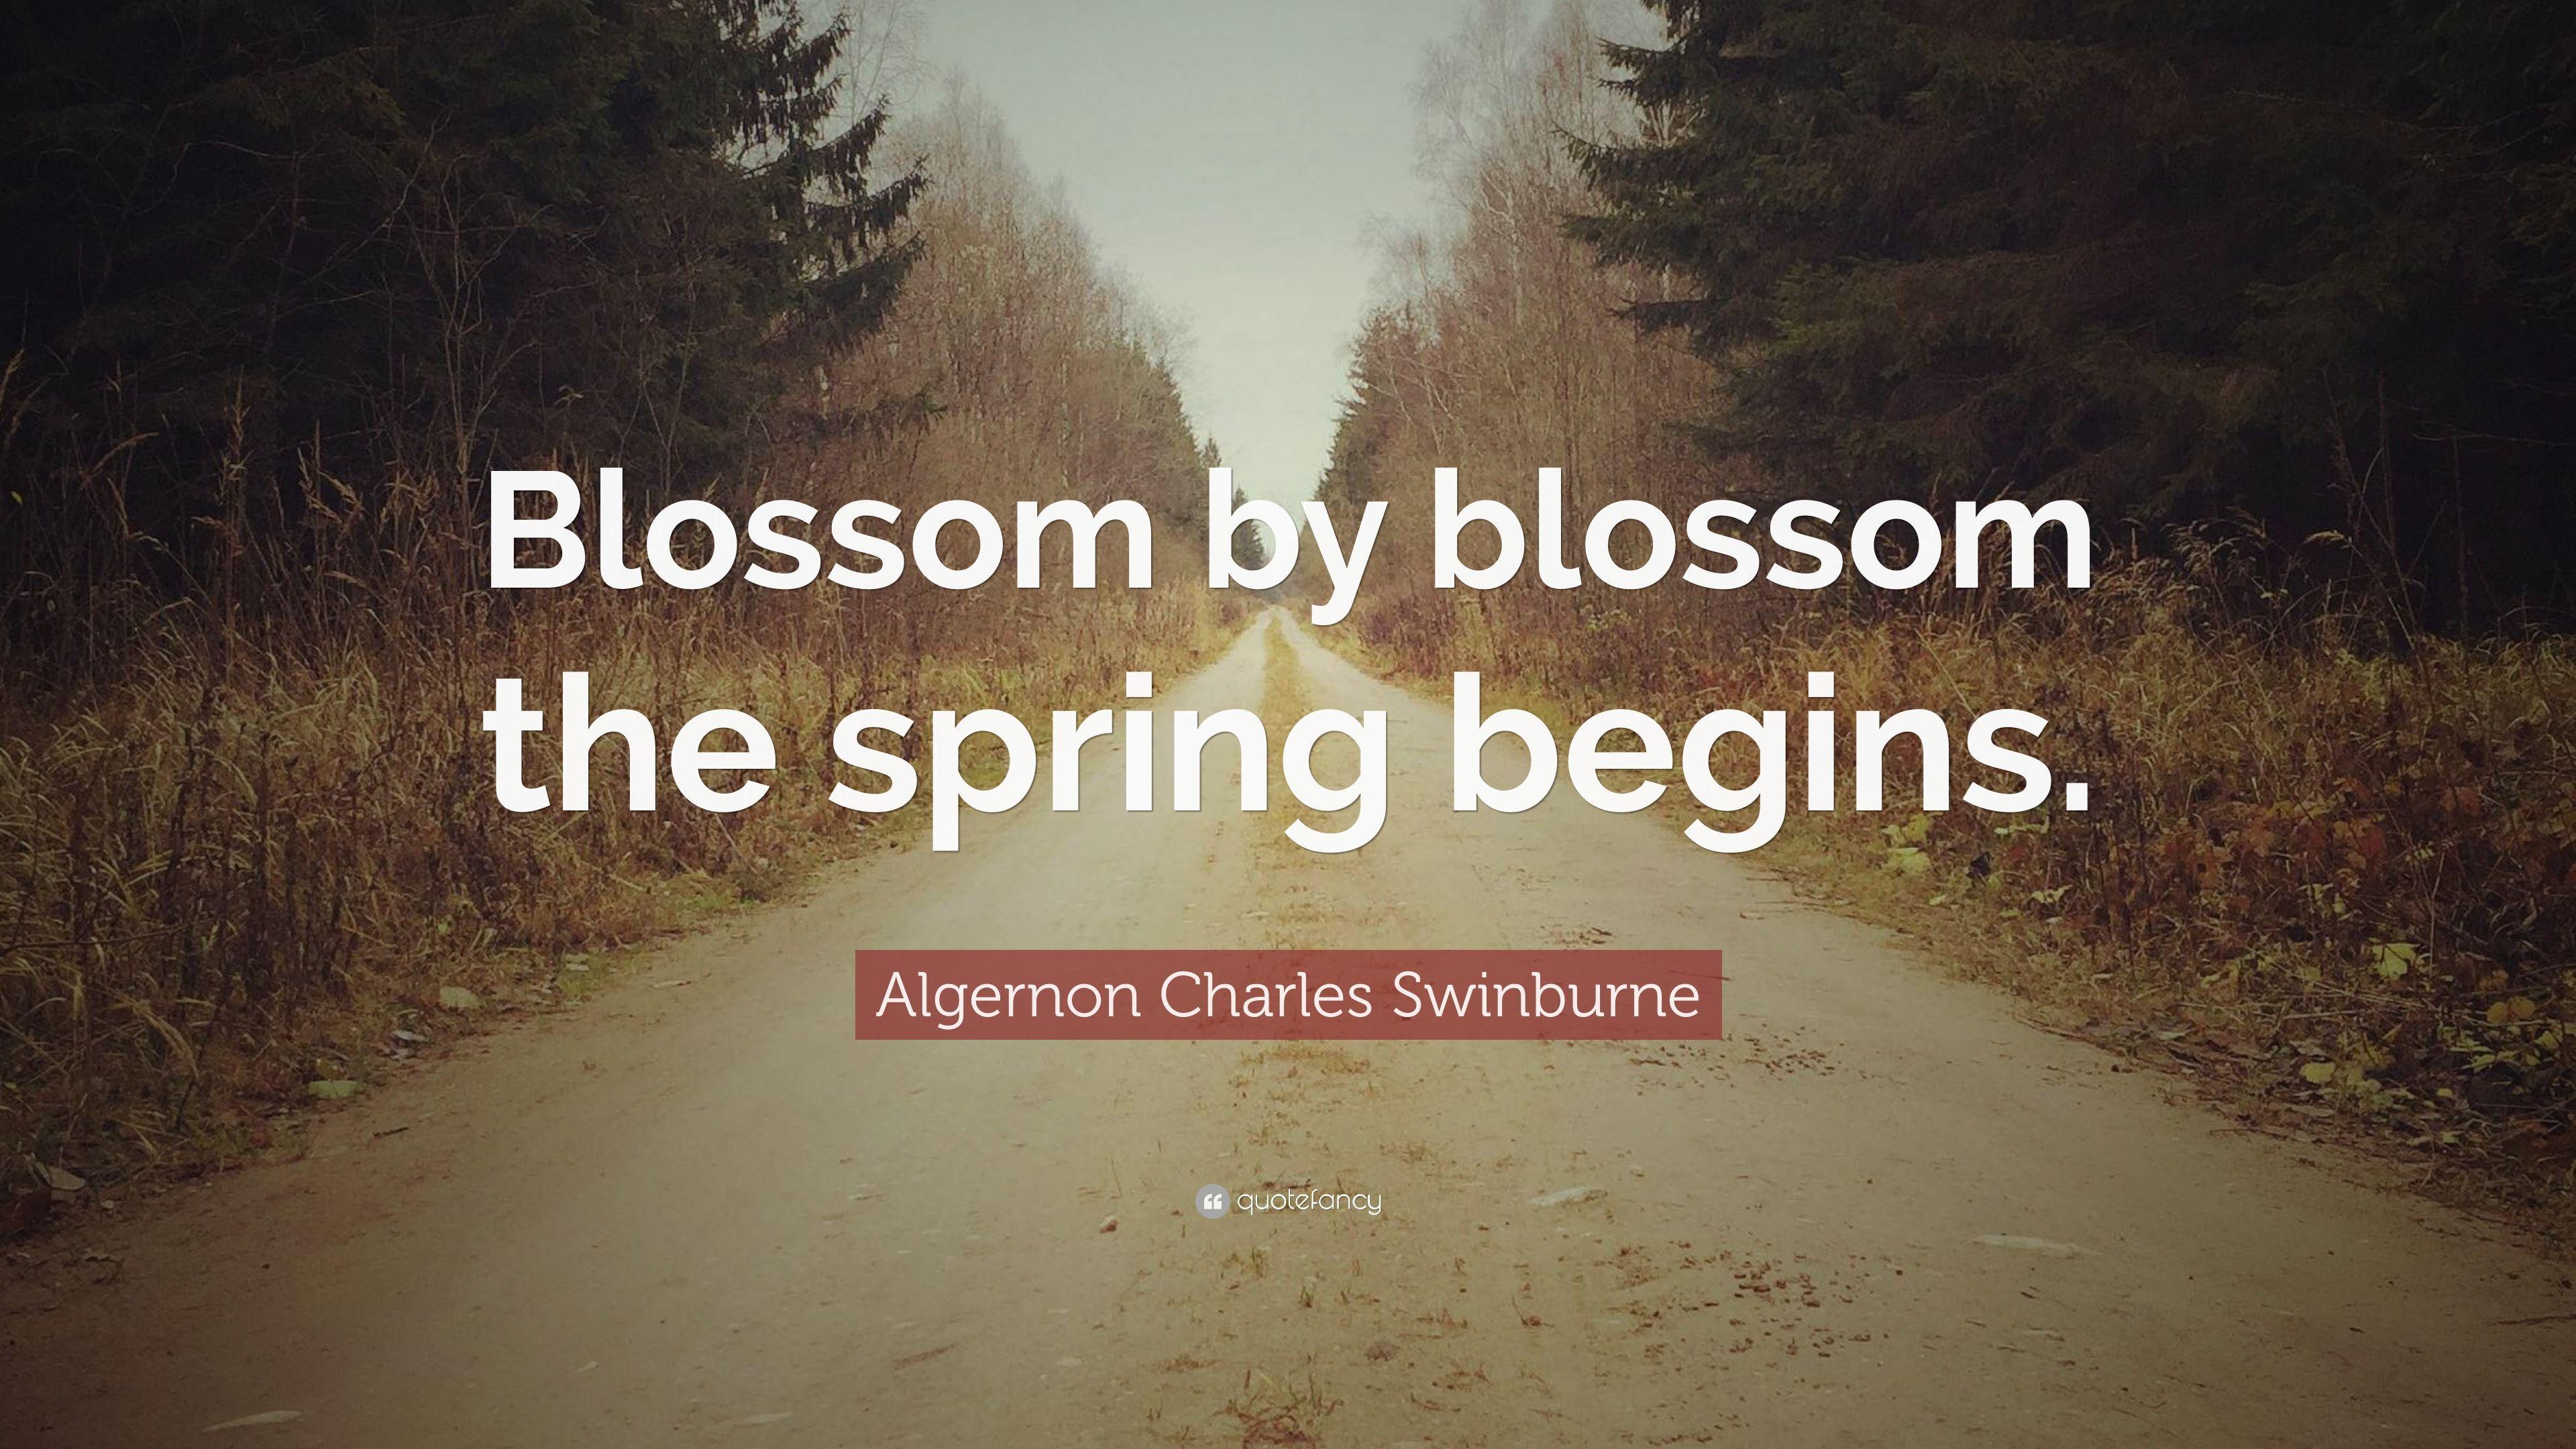 Algernon Charles Swinburne Quote: “Blossom by blossom the spring